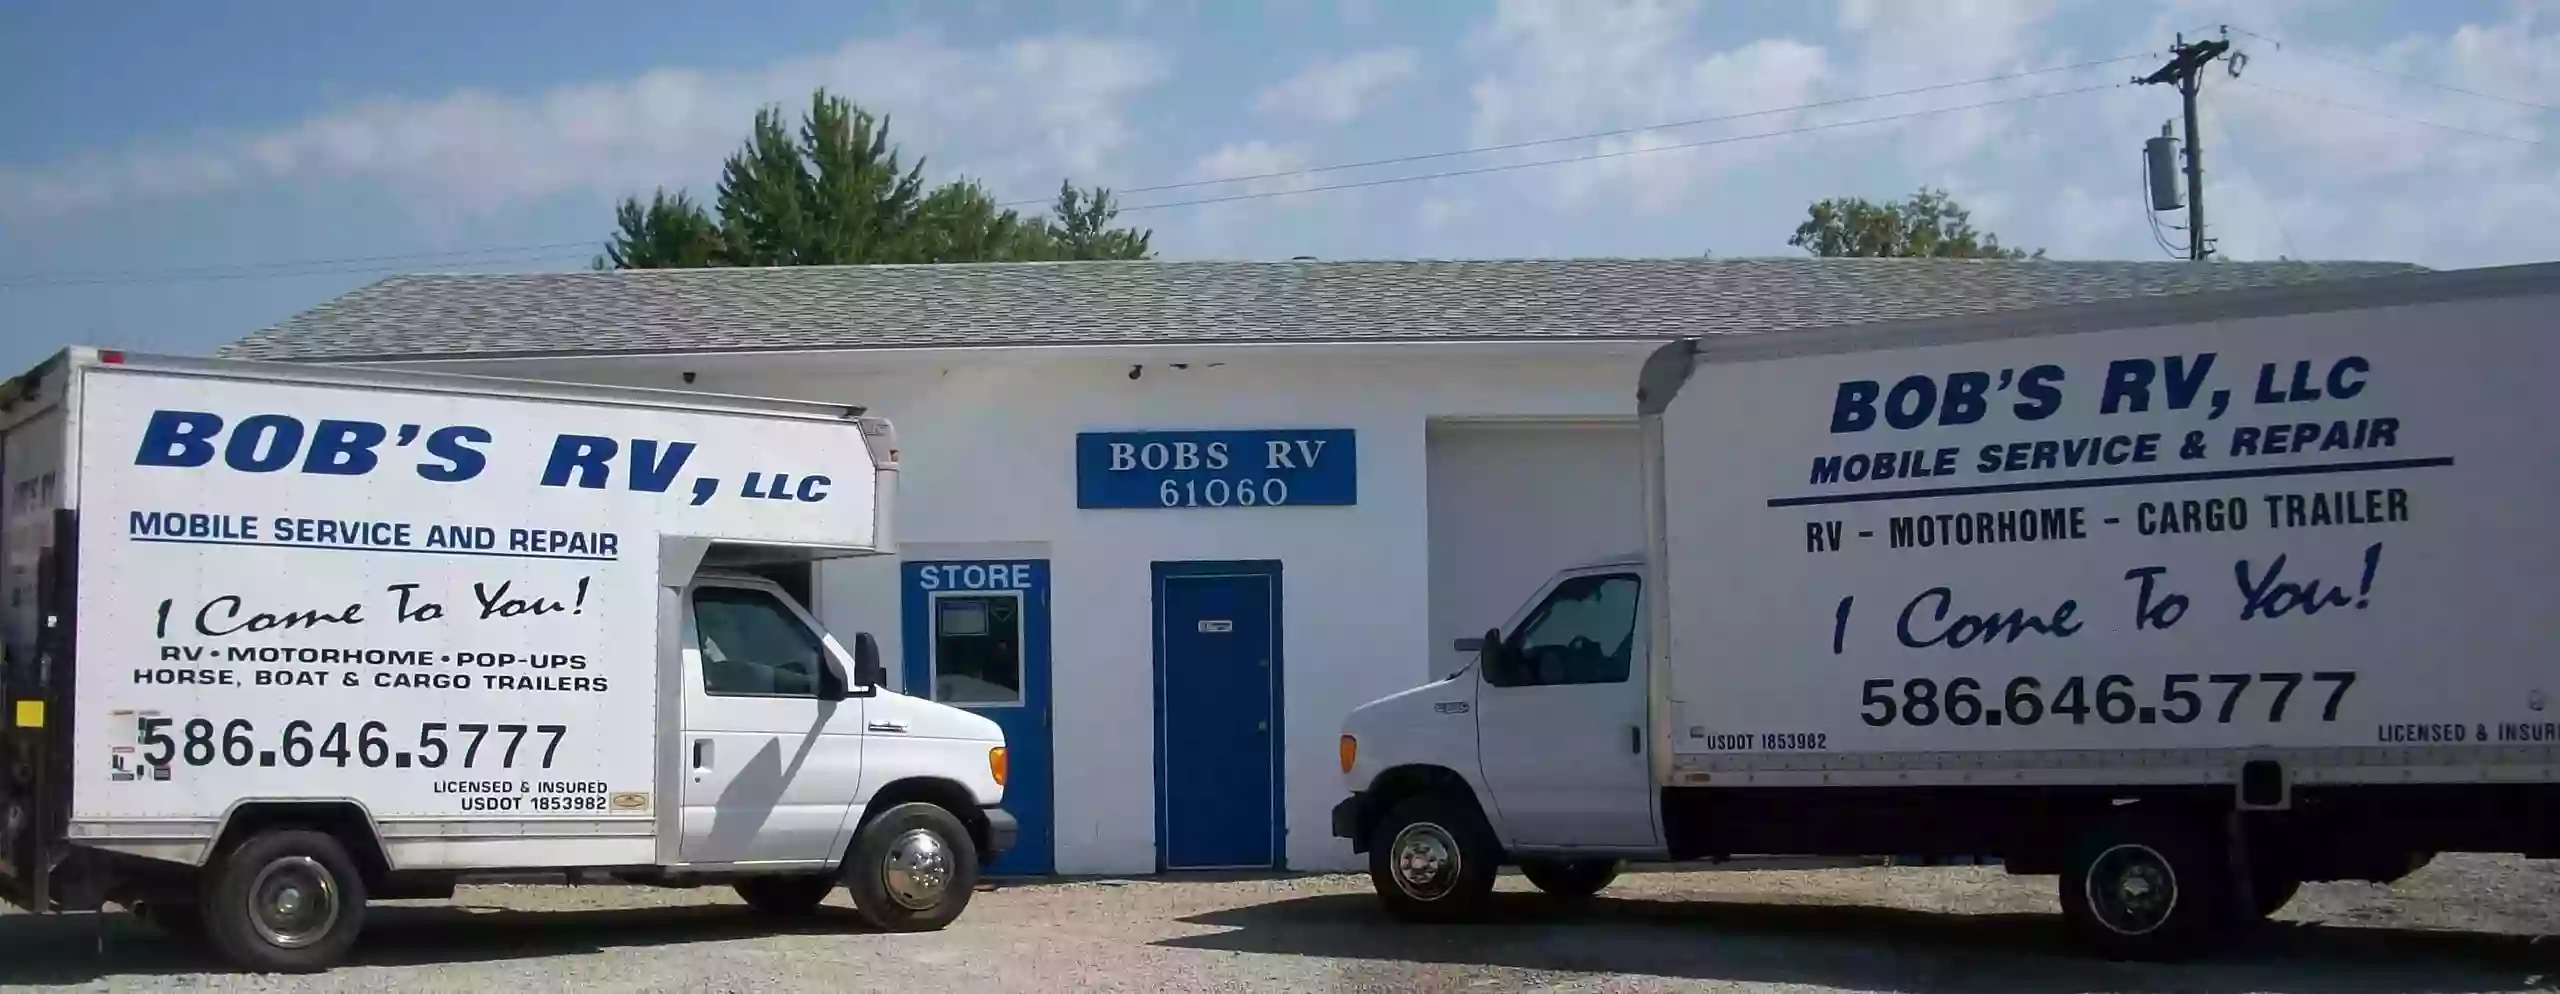 Bob's RV LLC, Mobile Service & Repair